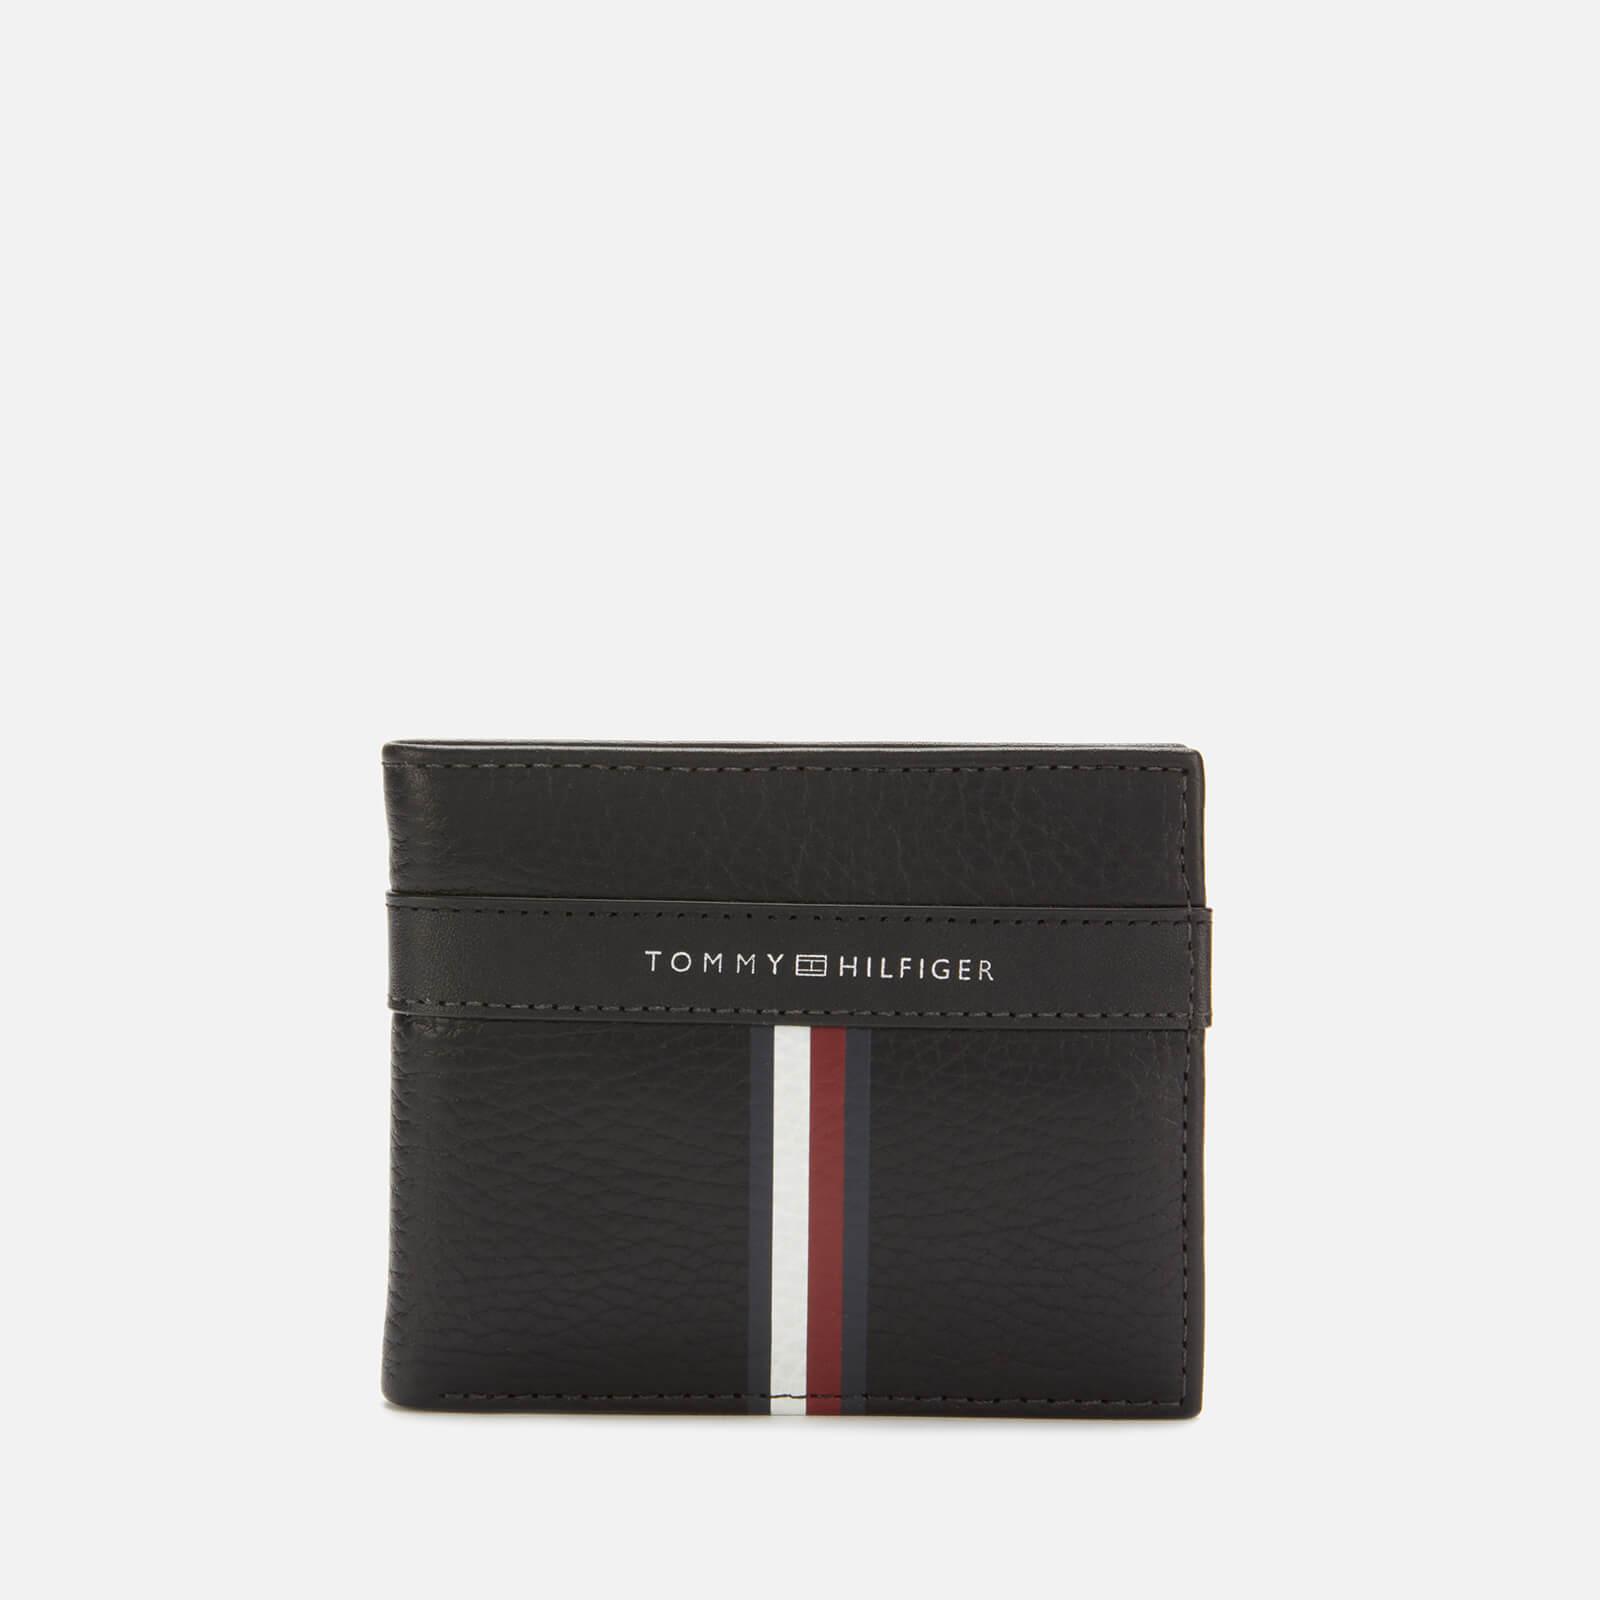 Tommy Hilfiger Mini Cc Wallet Factory Sale, SAVE 56%.